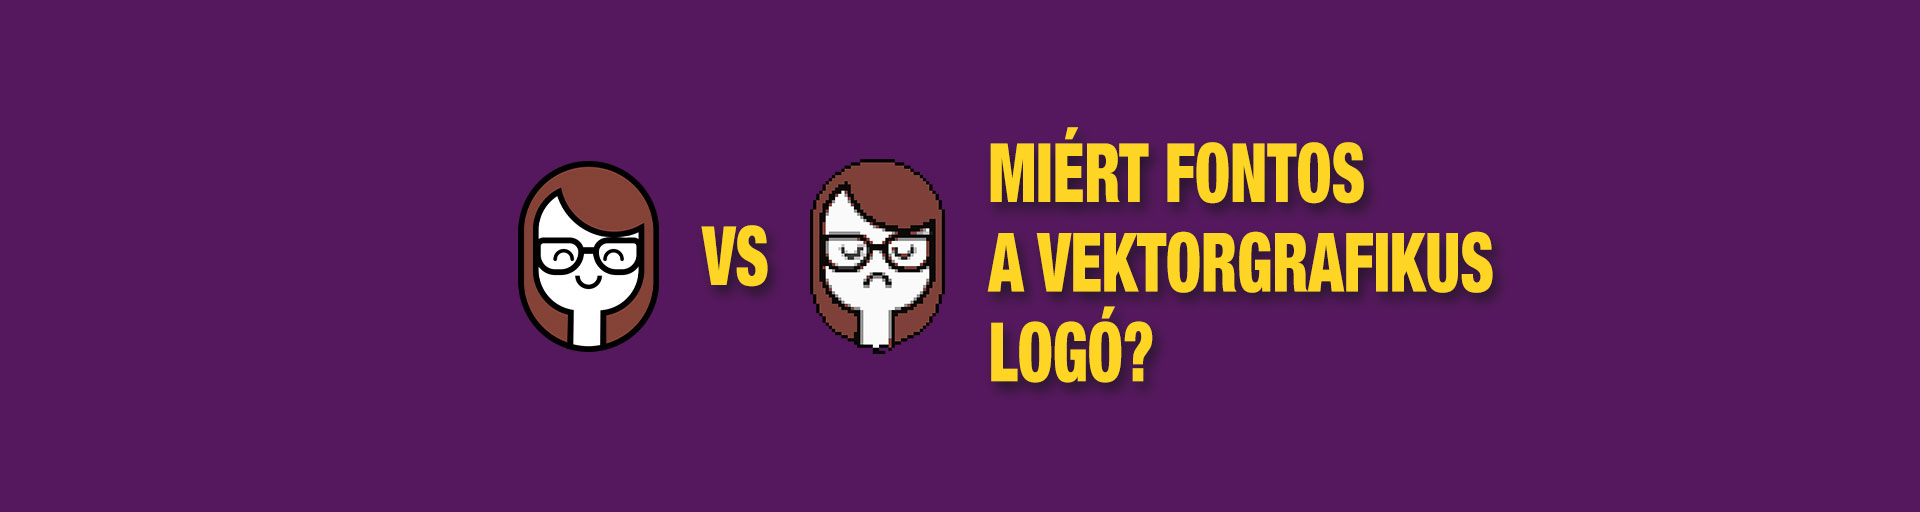 Miért fontos a vektorgrafikus logó?